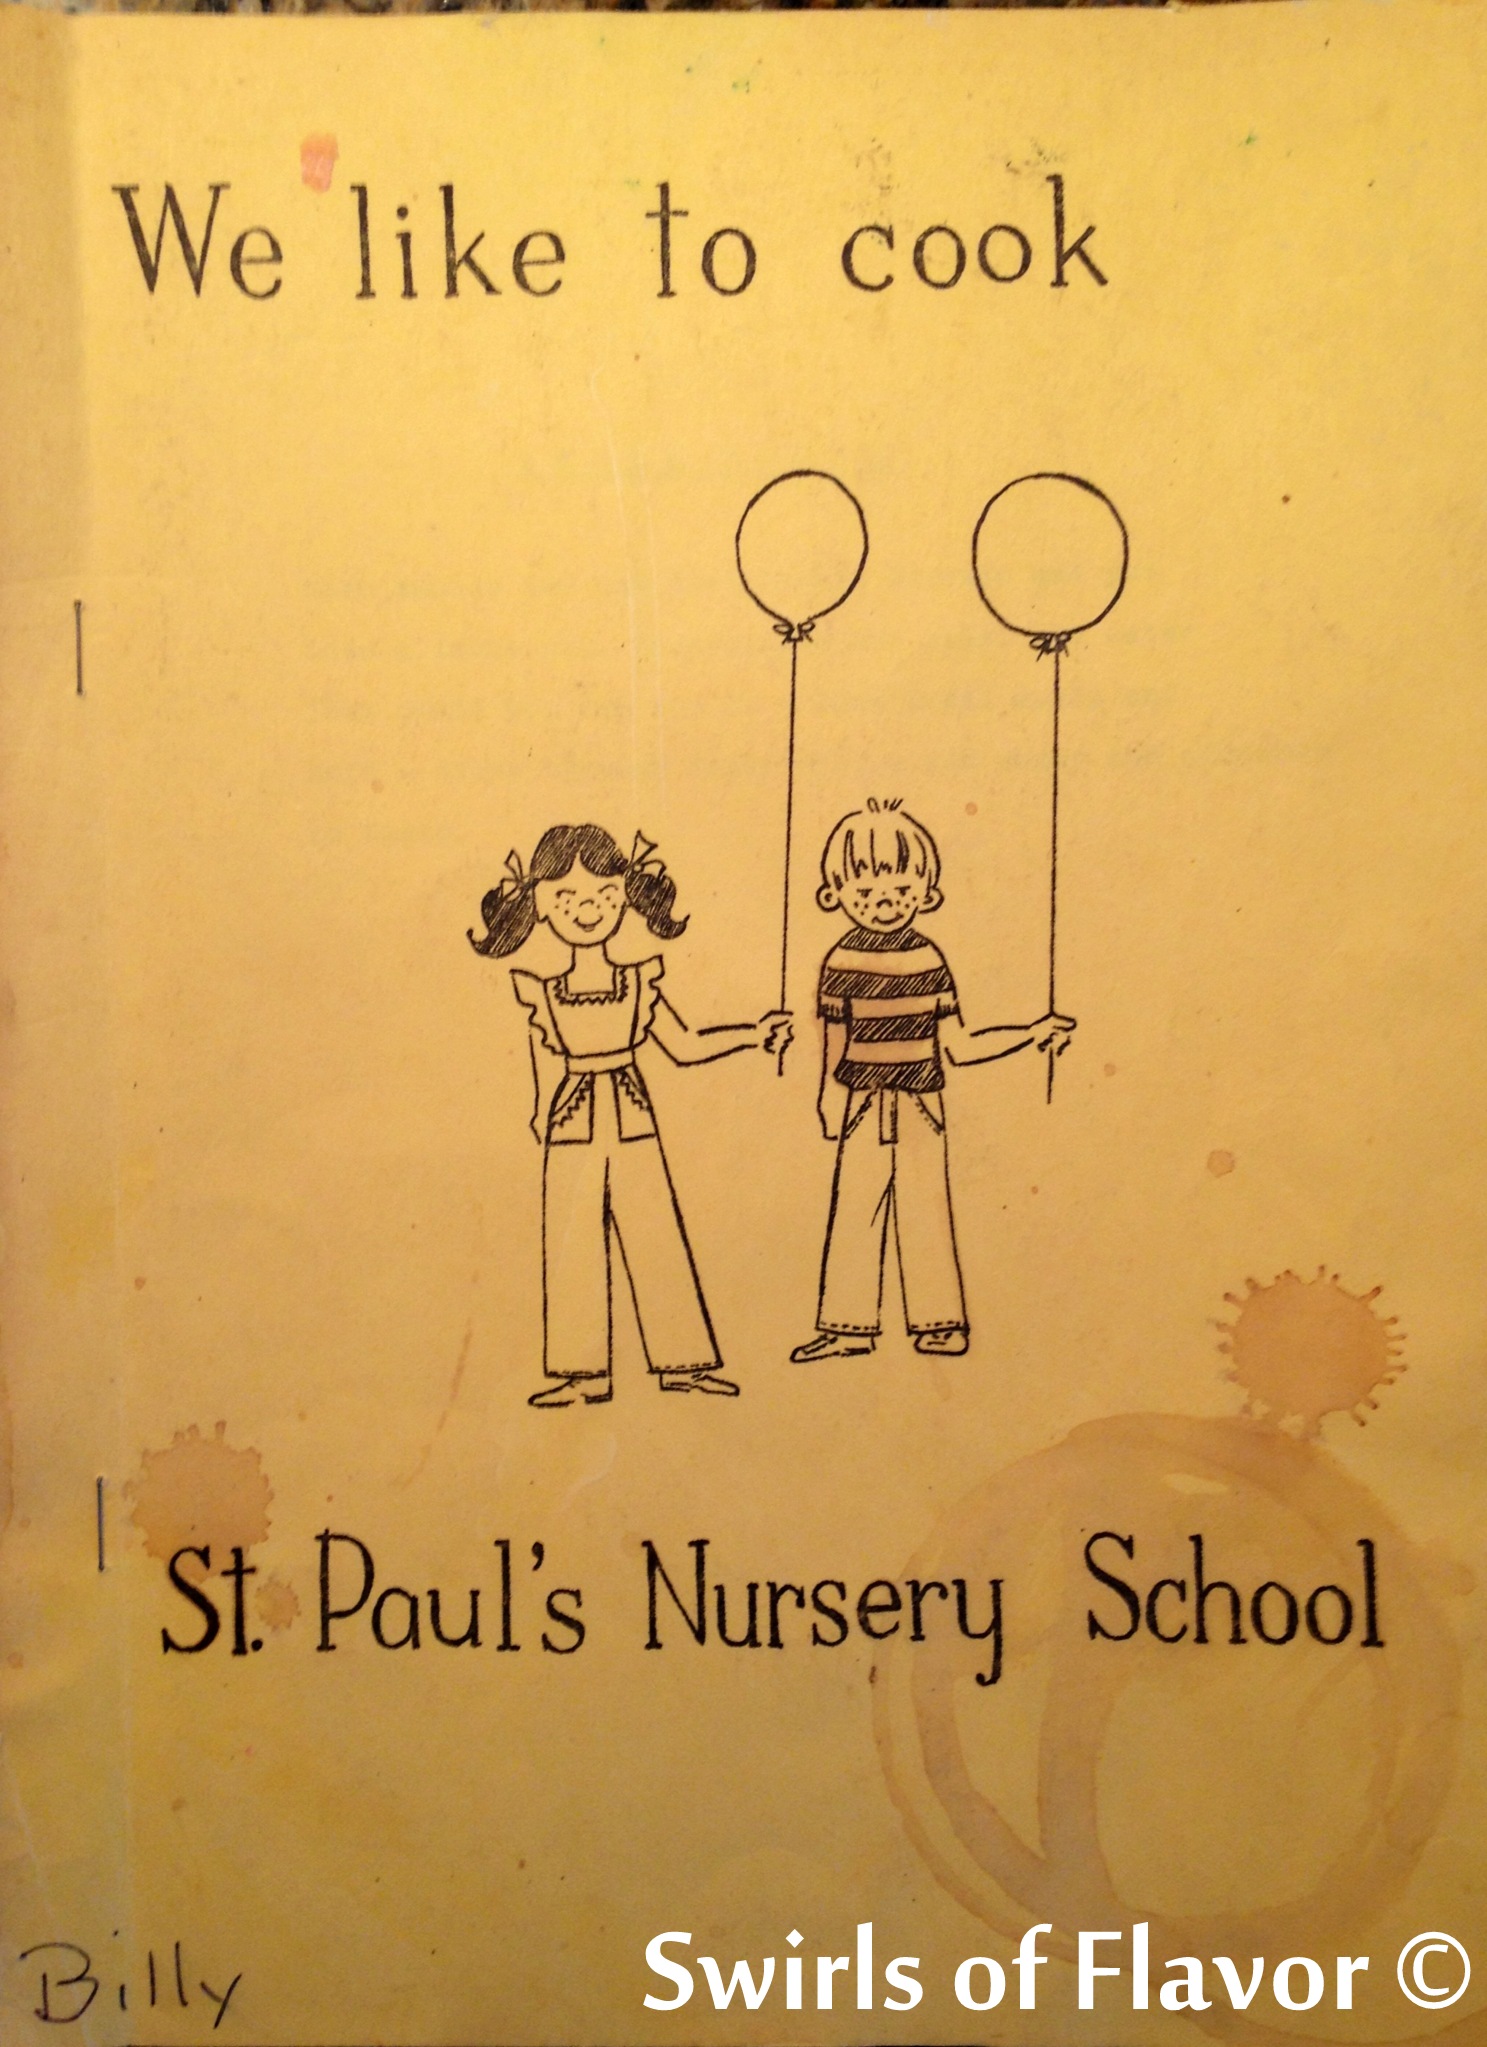 cover of nursery school cookbook